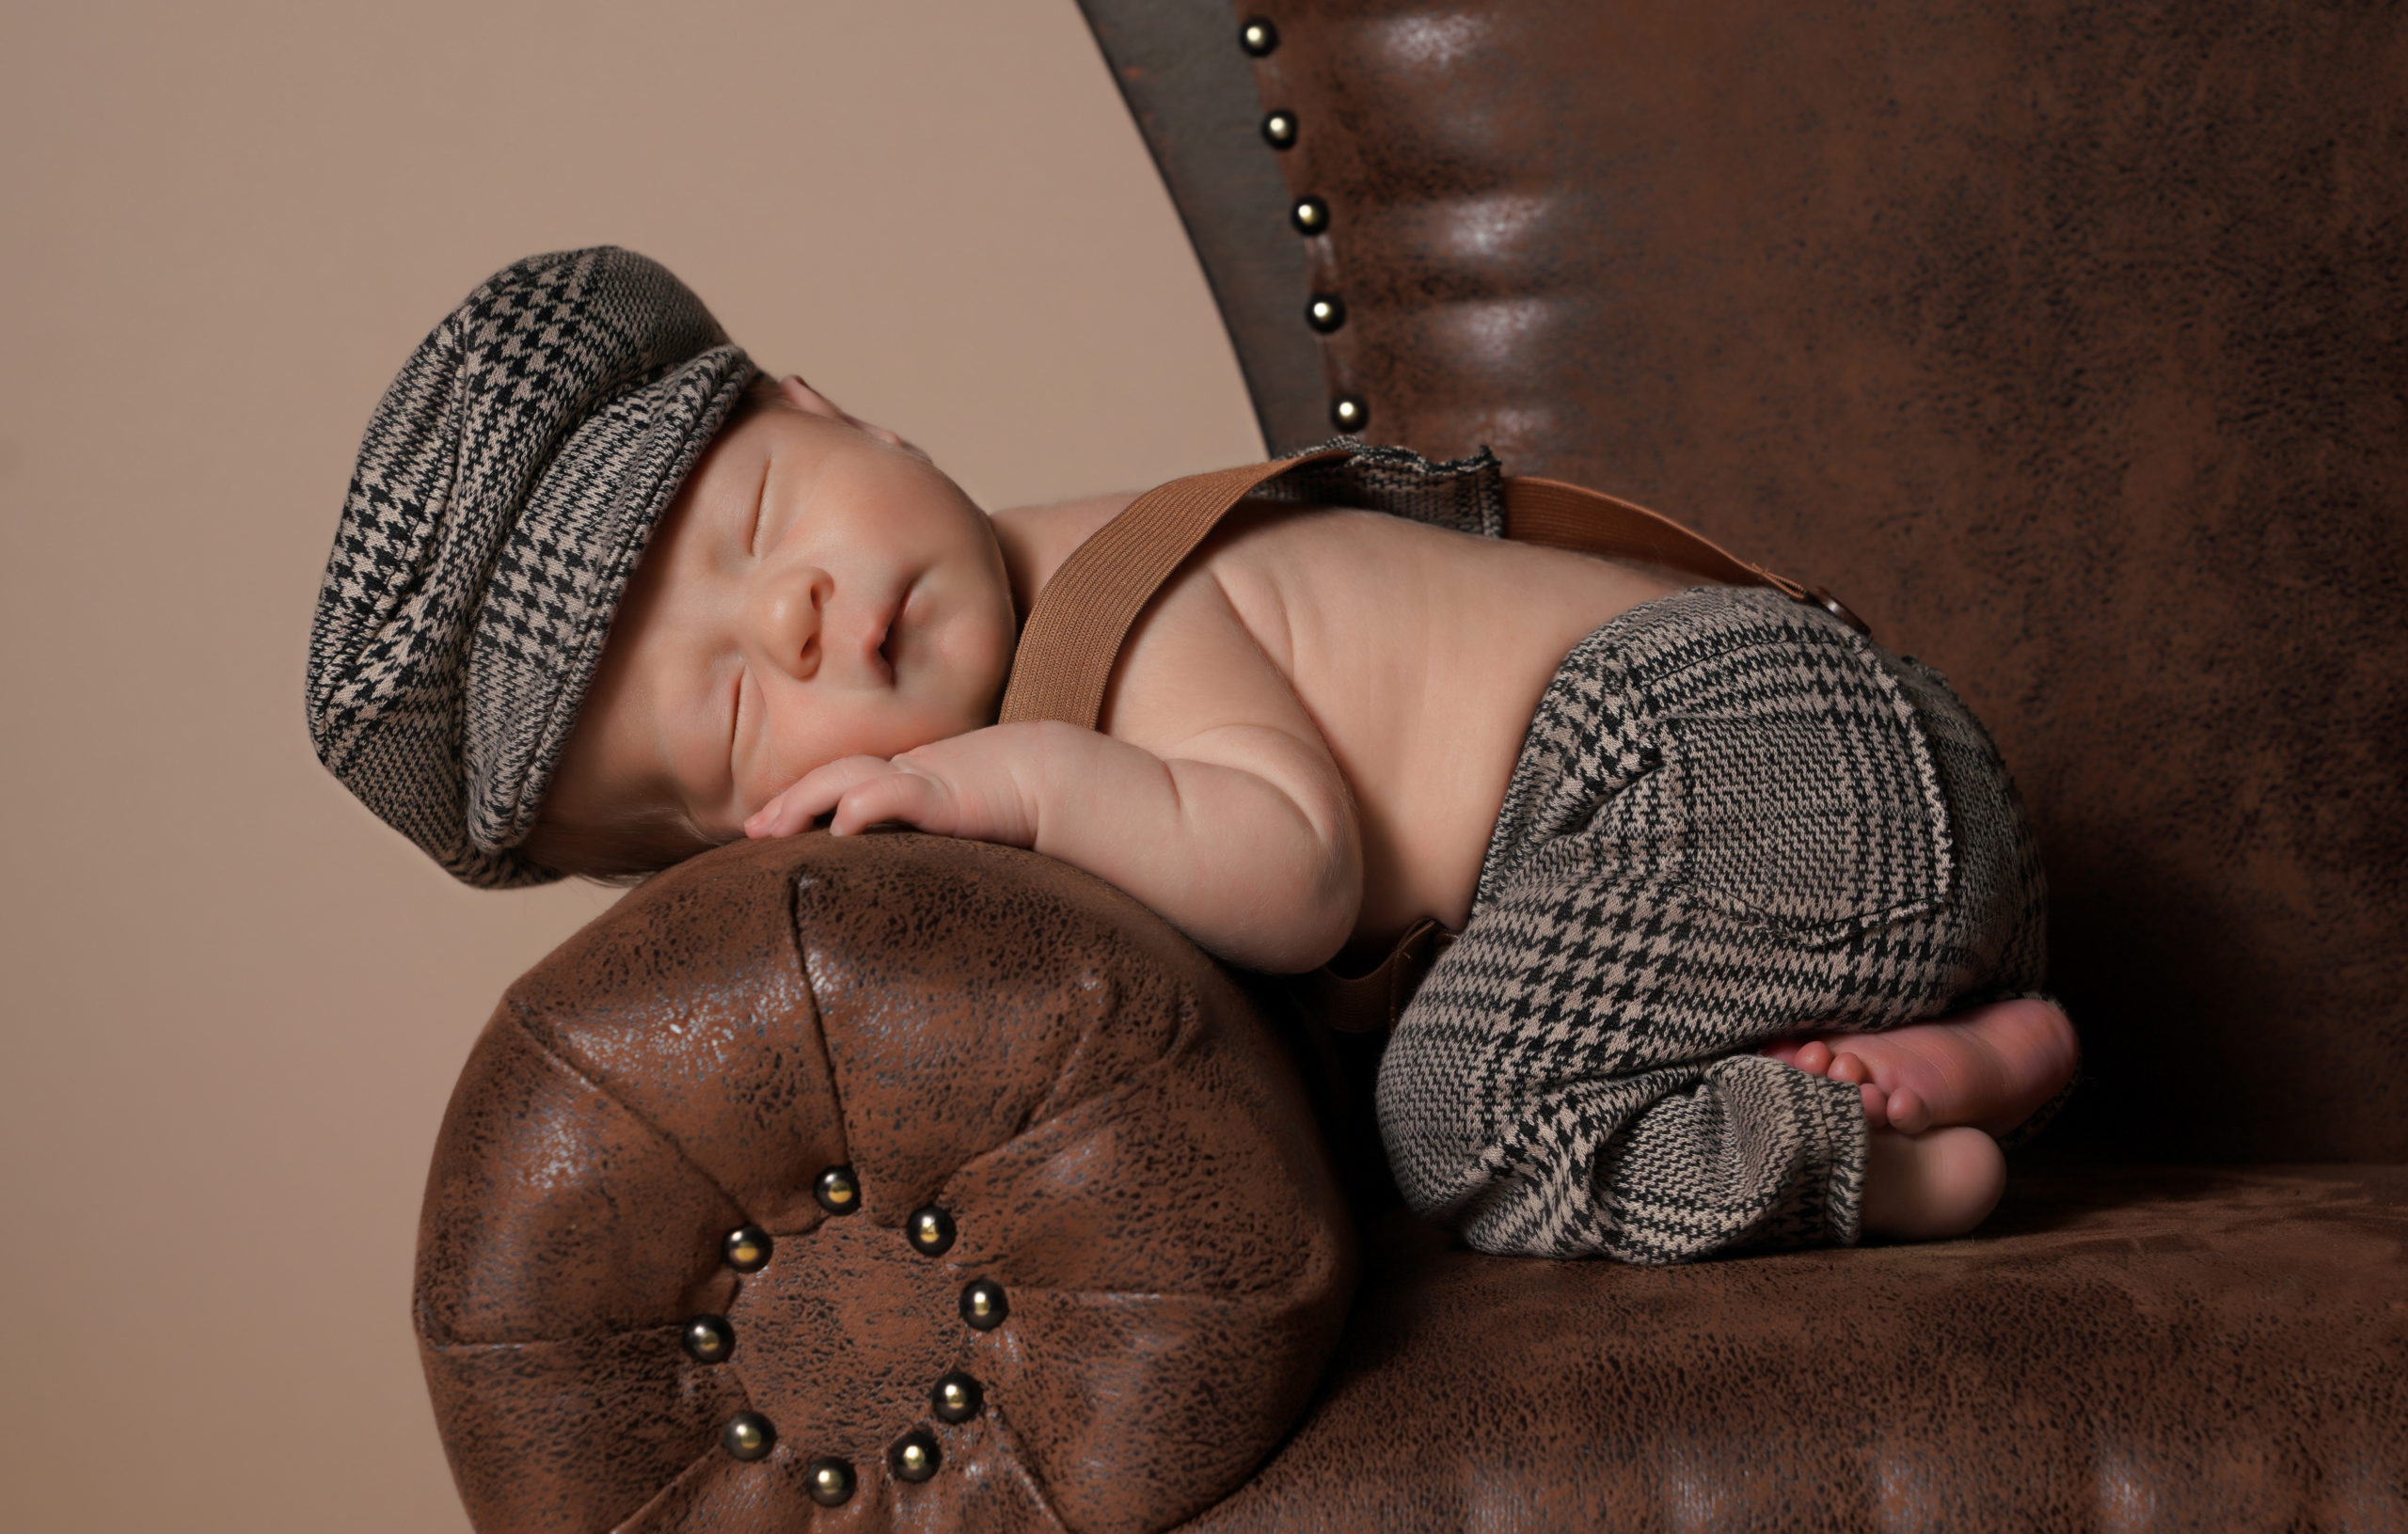 Newborn portrait sleeping on a couch arm.